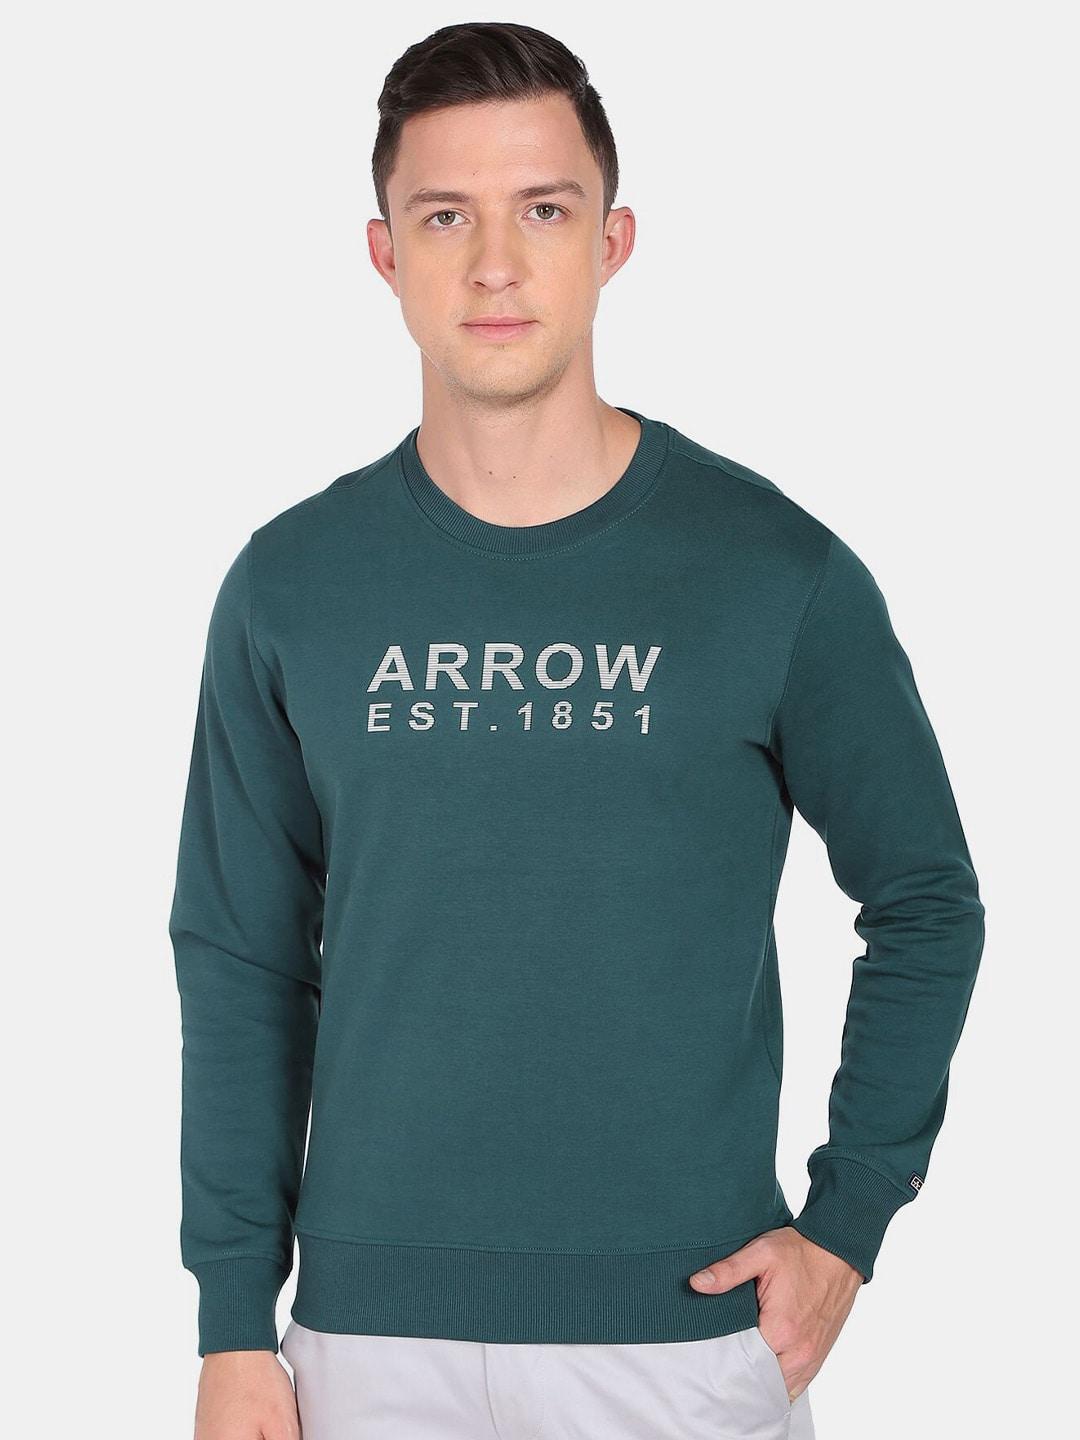 Arrow Sport Men Brand Logo Printed Pullover Sweatshirt